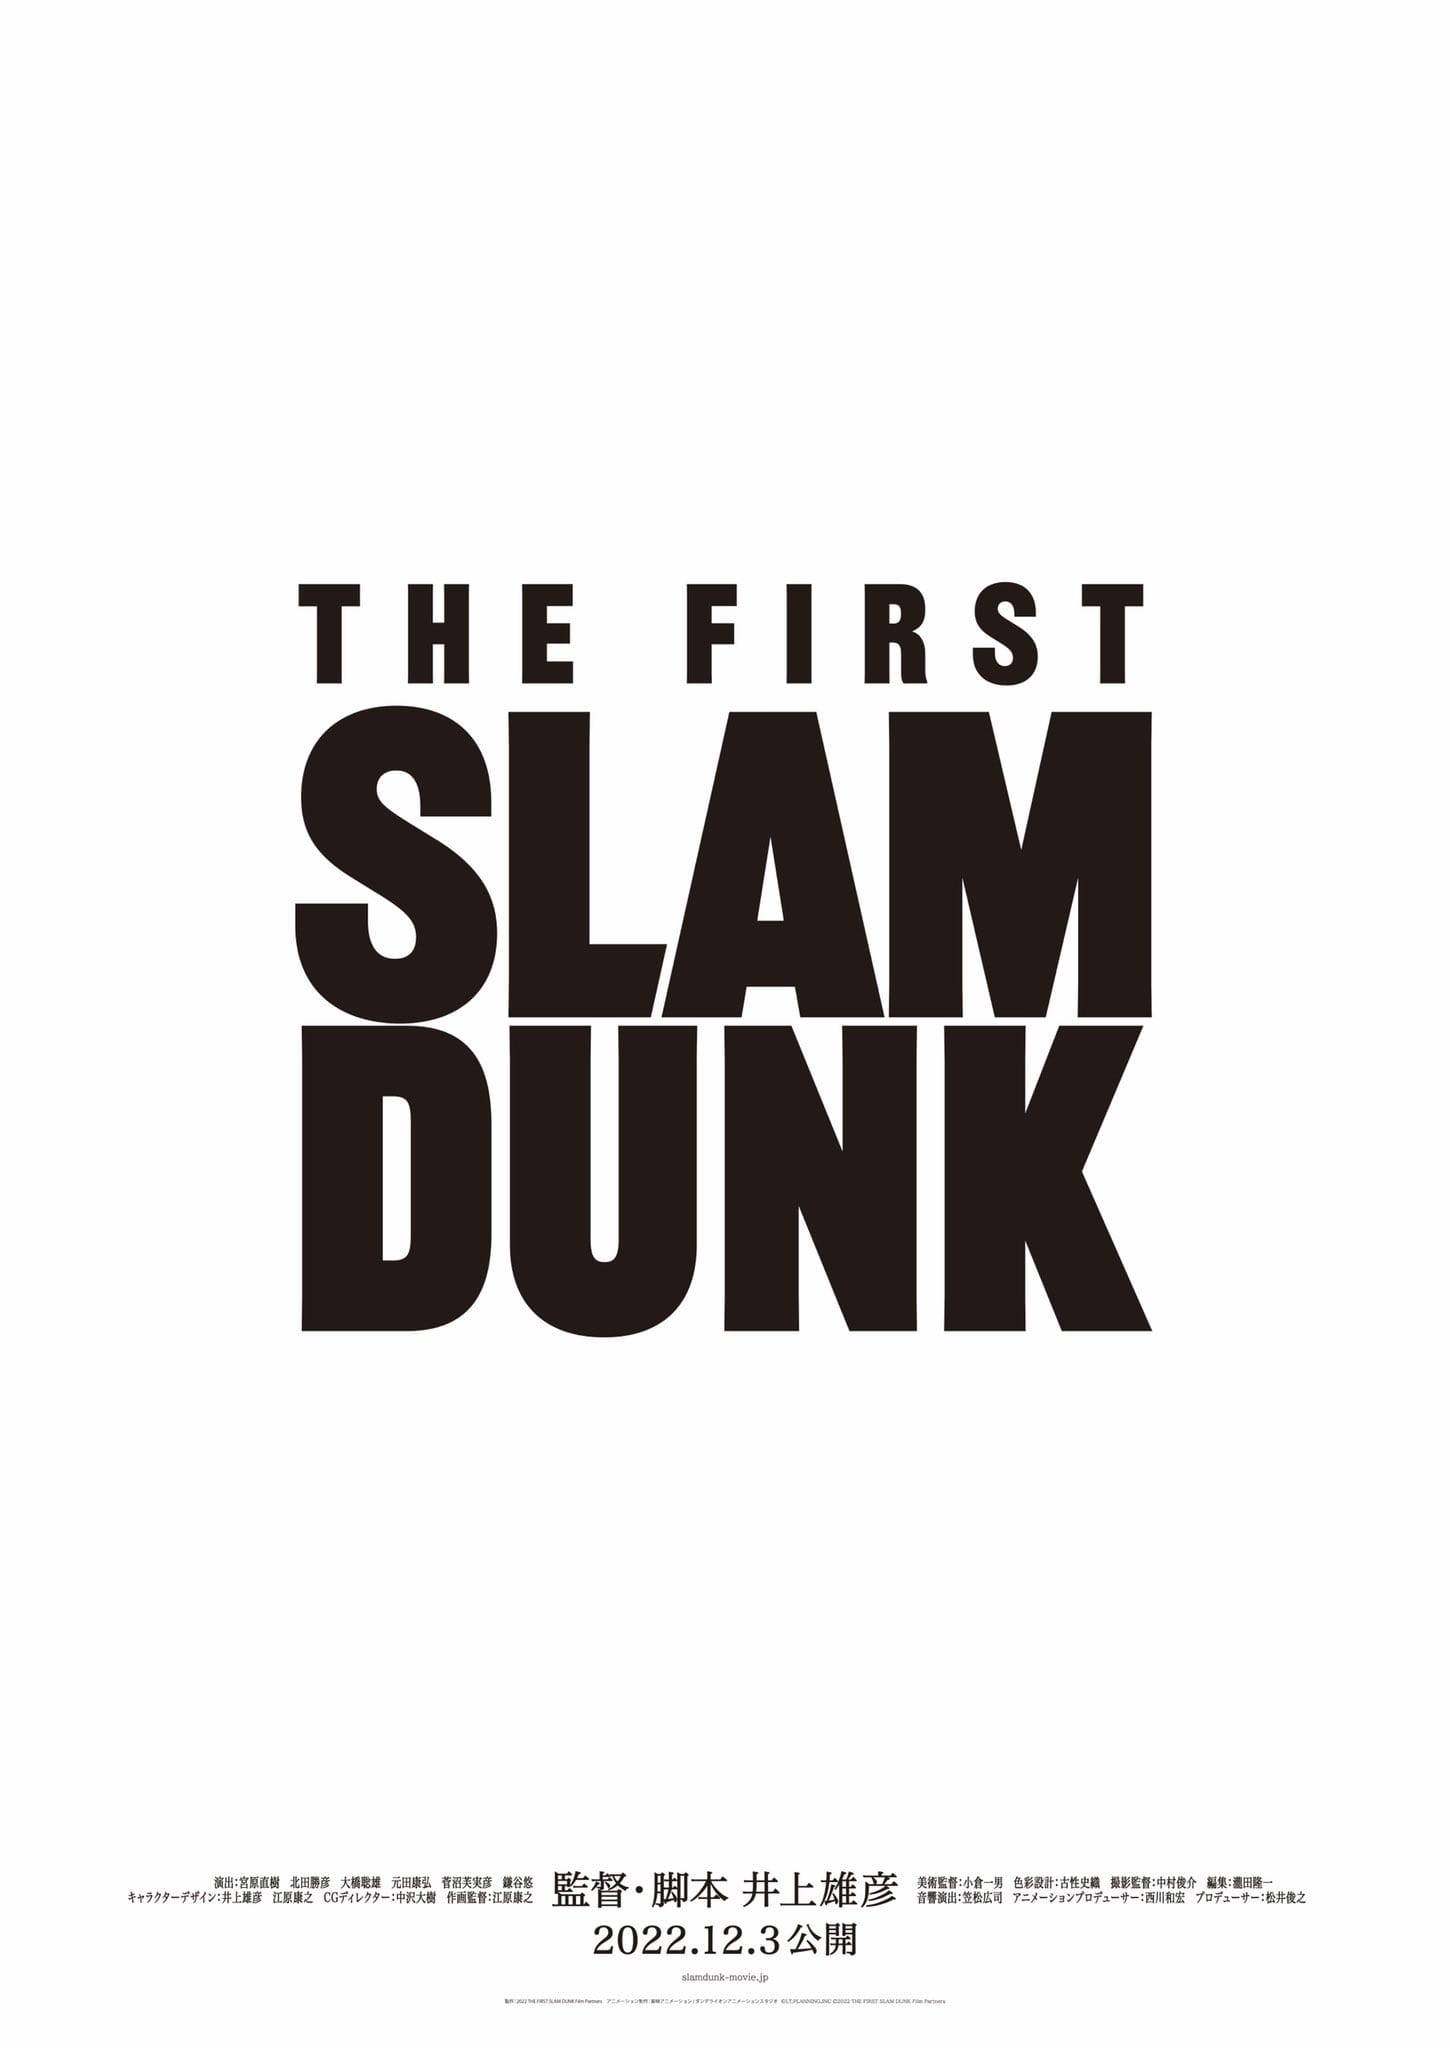 THE FIRST SLAM DUNK ムビチケカード 9月16日より発売スタート!